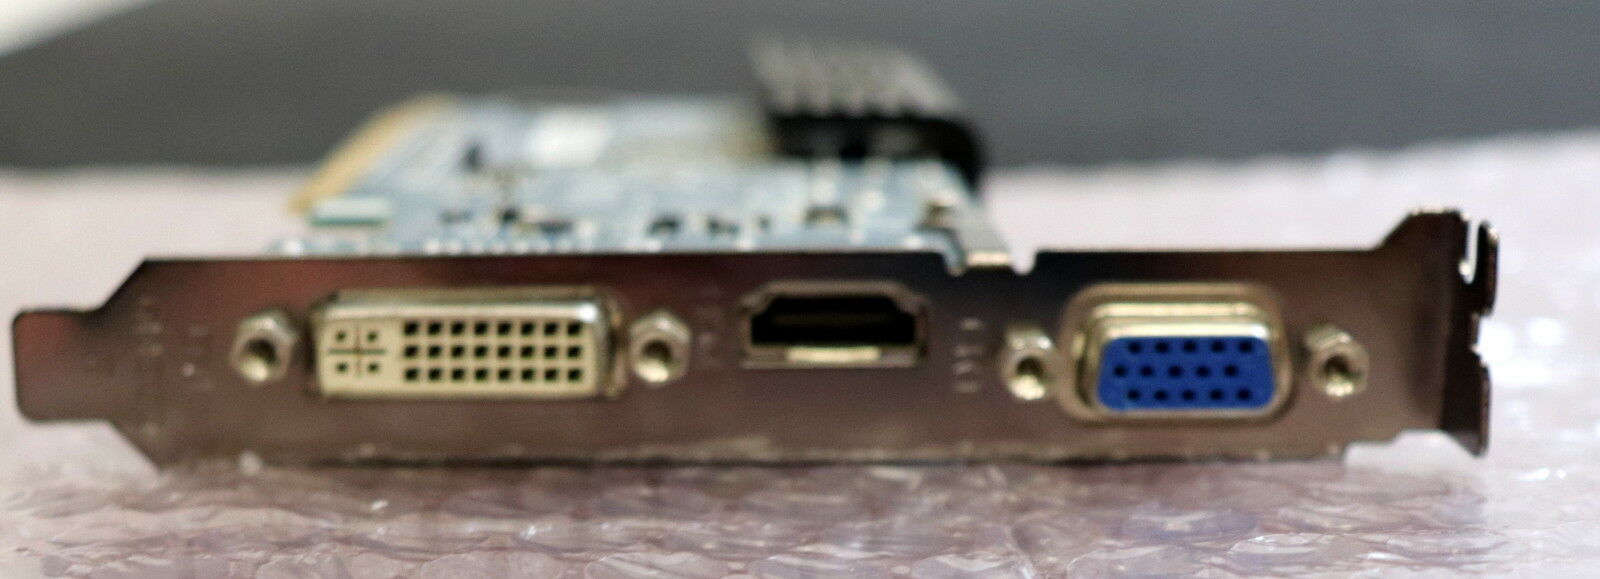 NANYA HDMI Graphikkarte HD5450 512M DDR3 PCI-E PN 299-BE164-00SA gebraucht